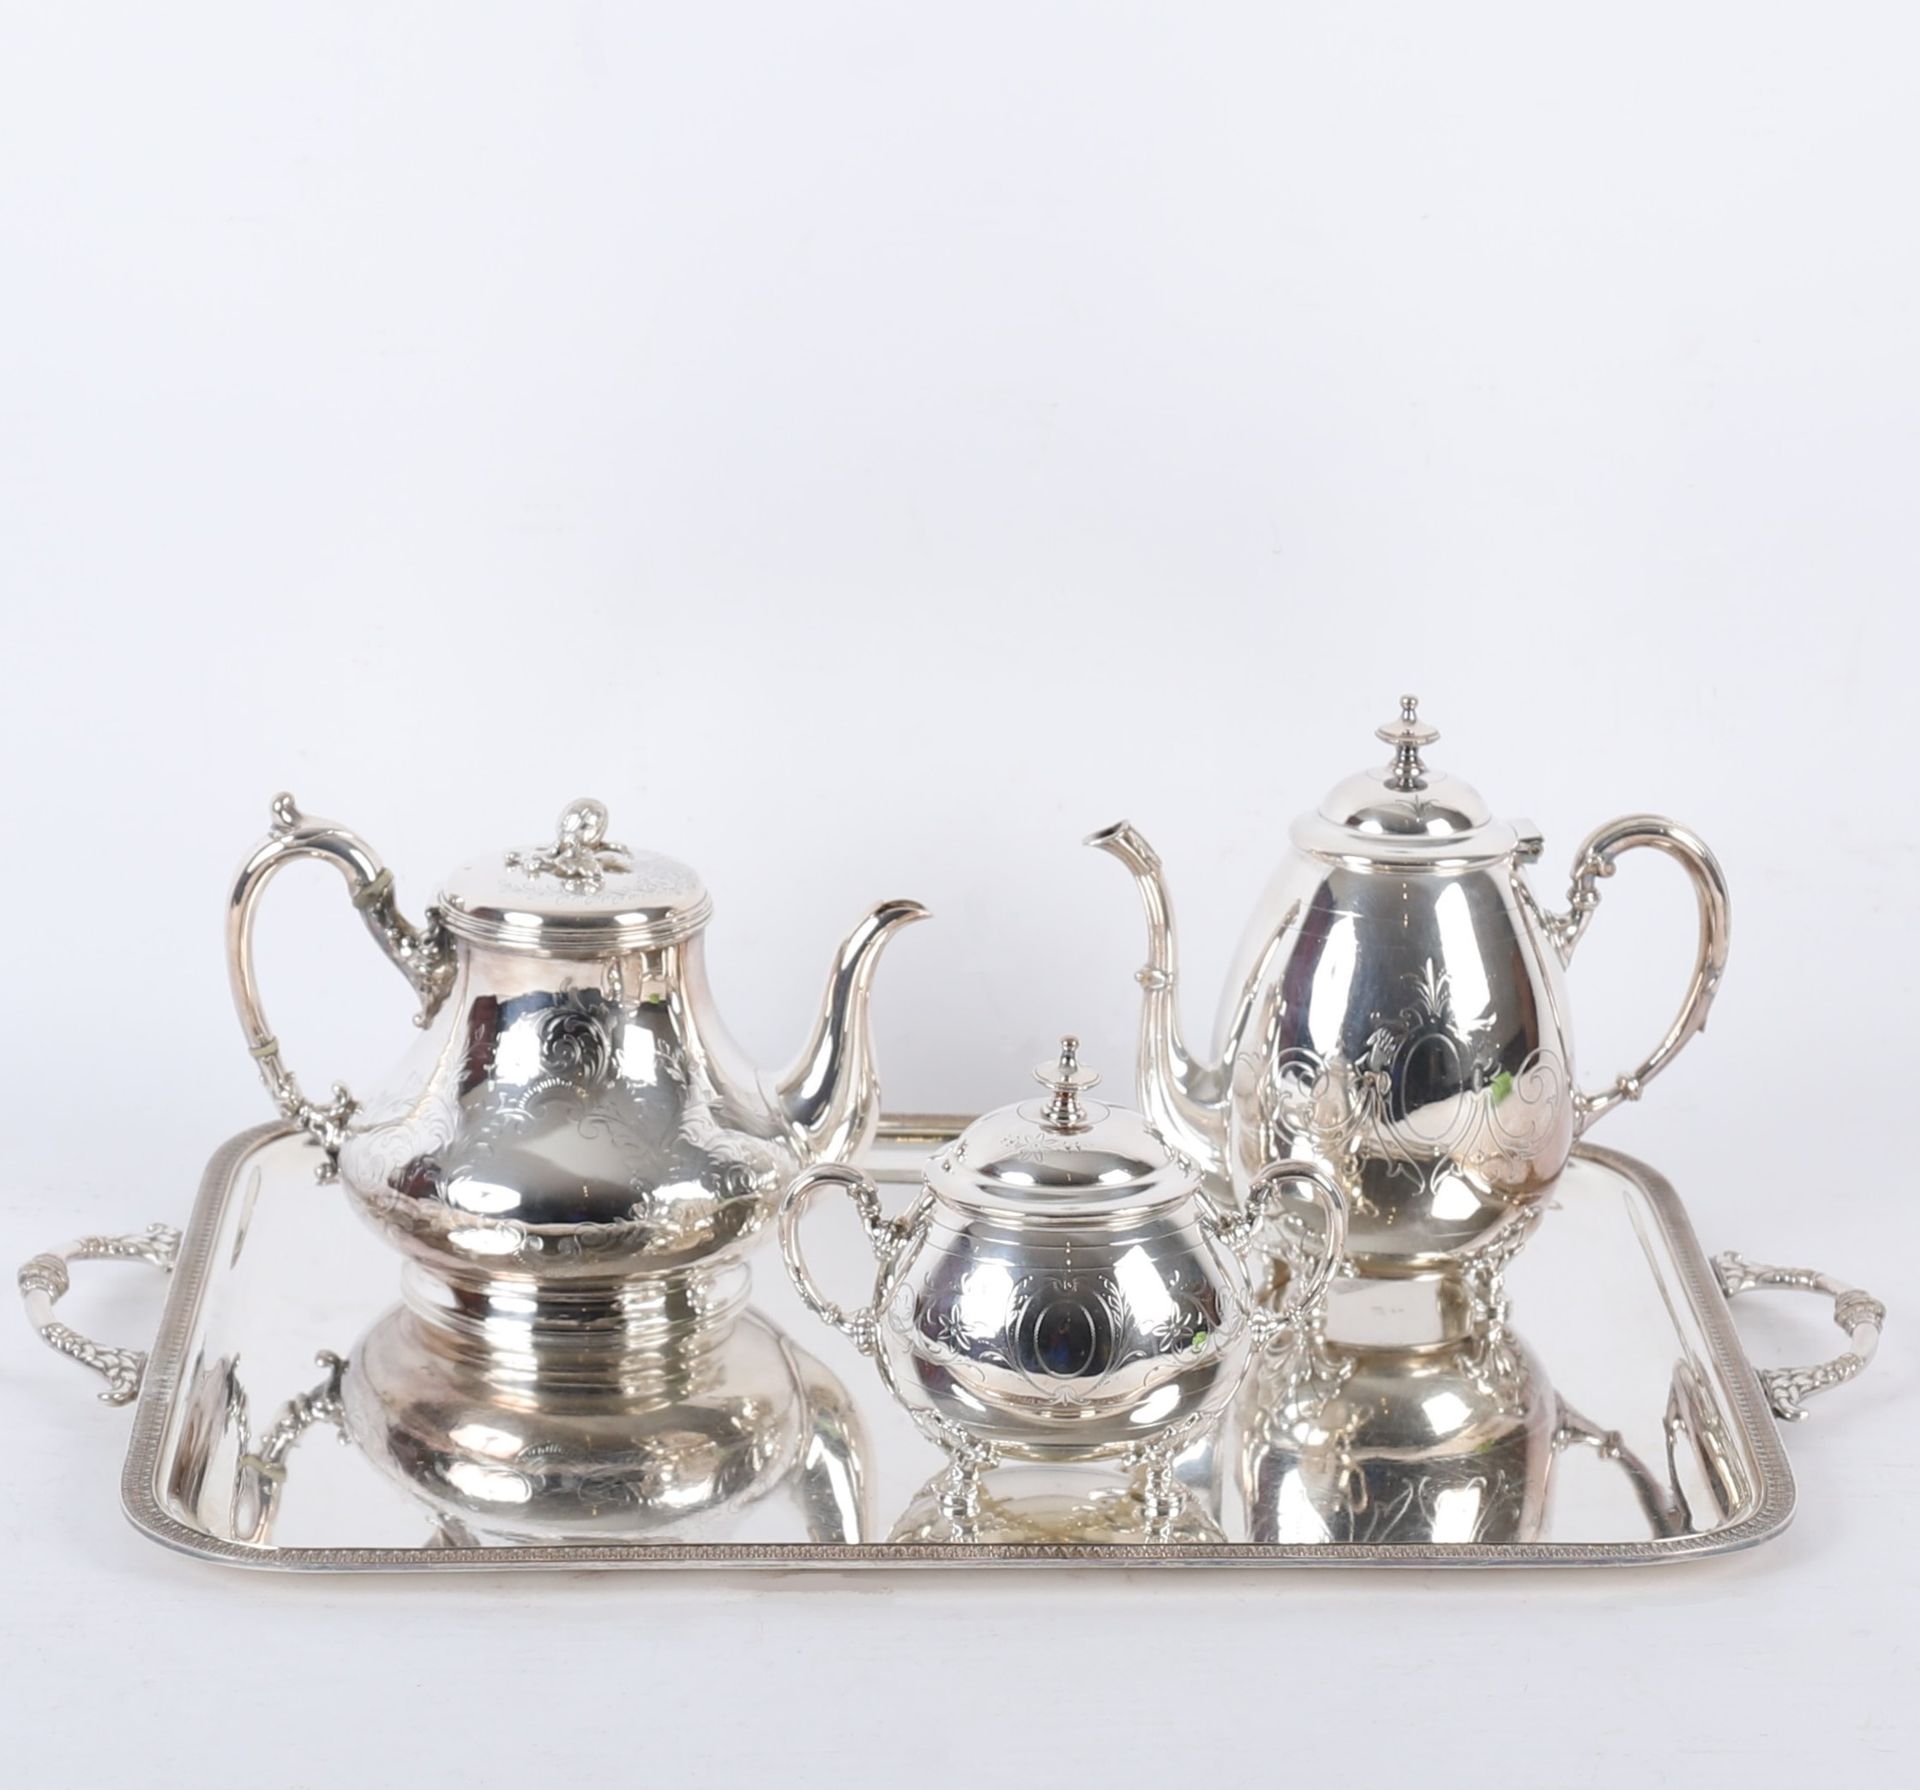 Null 3件式镀银服务和大托盘
服务包括茶壶（WMF），咖啡壶和糖碗，有雕刻的装饰
托盘有两个把手和一个棕榈花纹的楣板
茶壶的高度：20厘米
托盘：60 x &hellip;